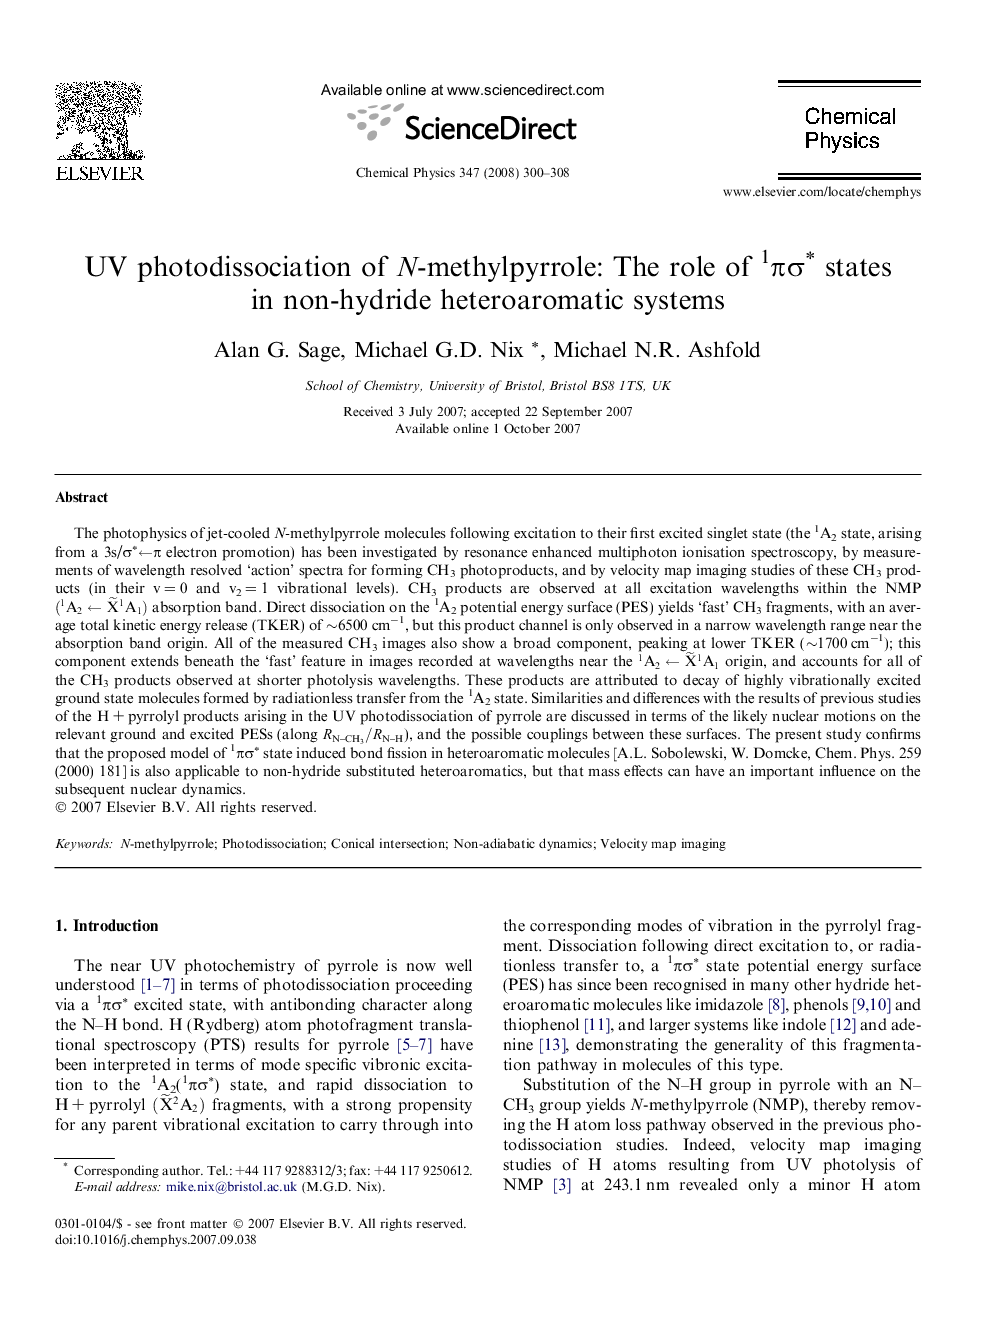 UV photodissociation of N-methylpyrrole: The role of 1ÏÏâ states in non-hydride heteroaromatic systems